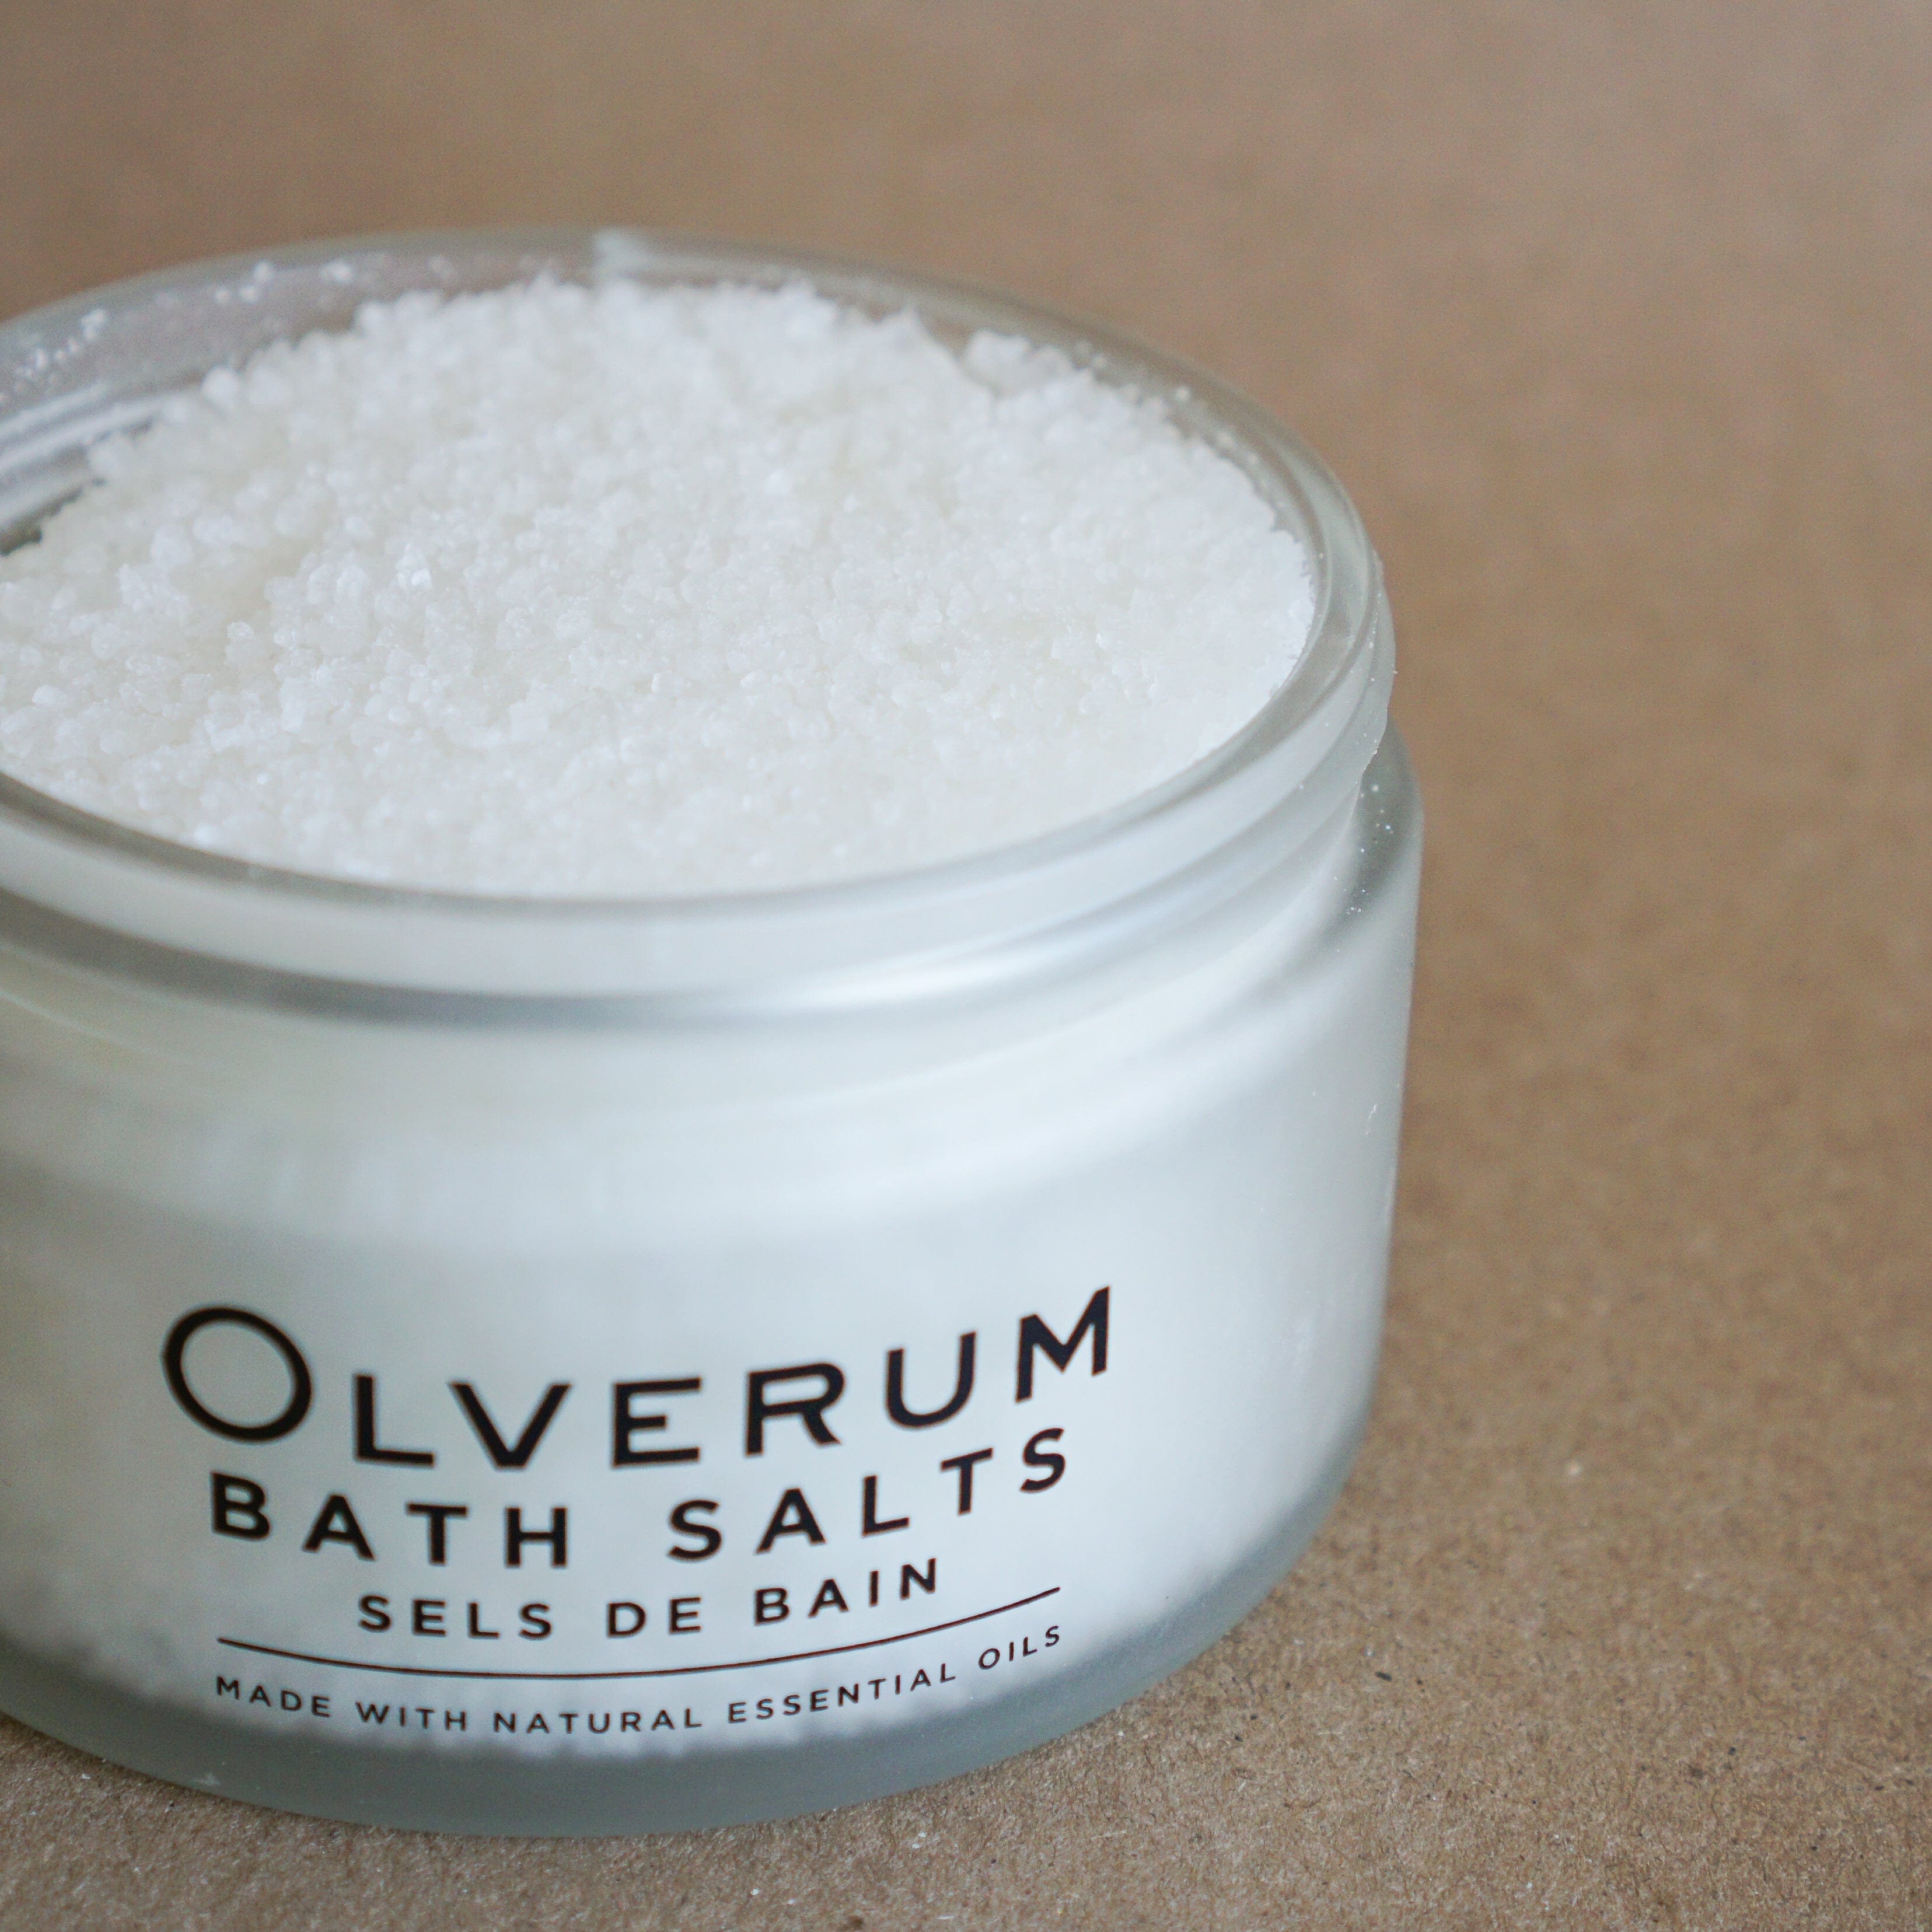 Olverum Apothecary Olverum Bath Salts